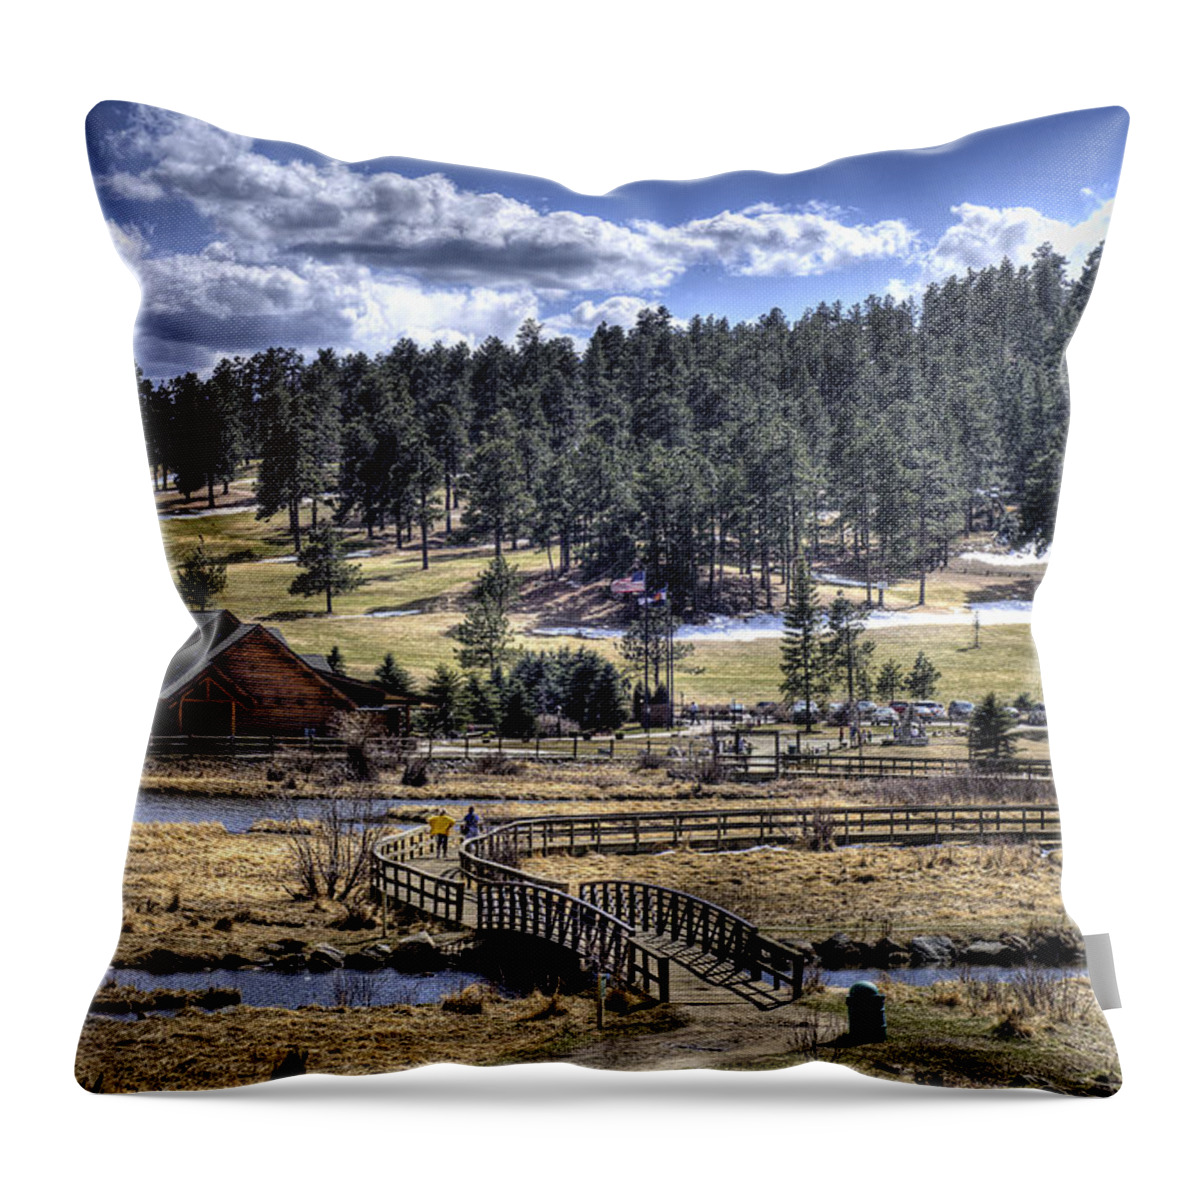 Evergreen Colorado Throw Pillow featuring the photograph Evergreen Colorado Lakehouse by Ron White